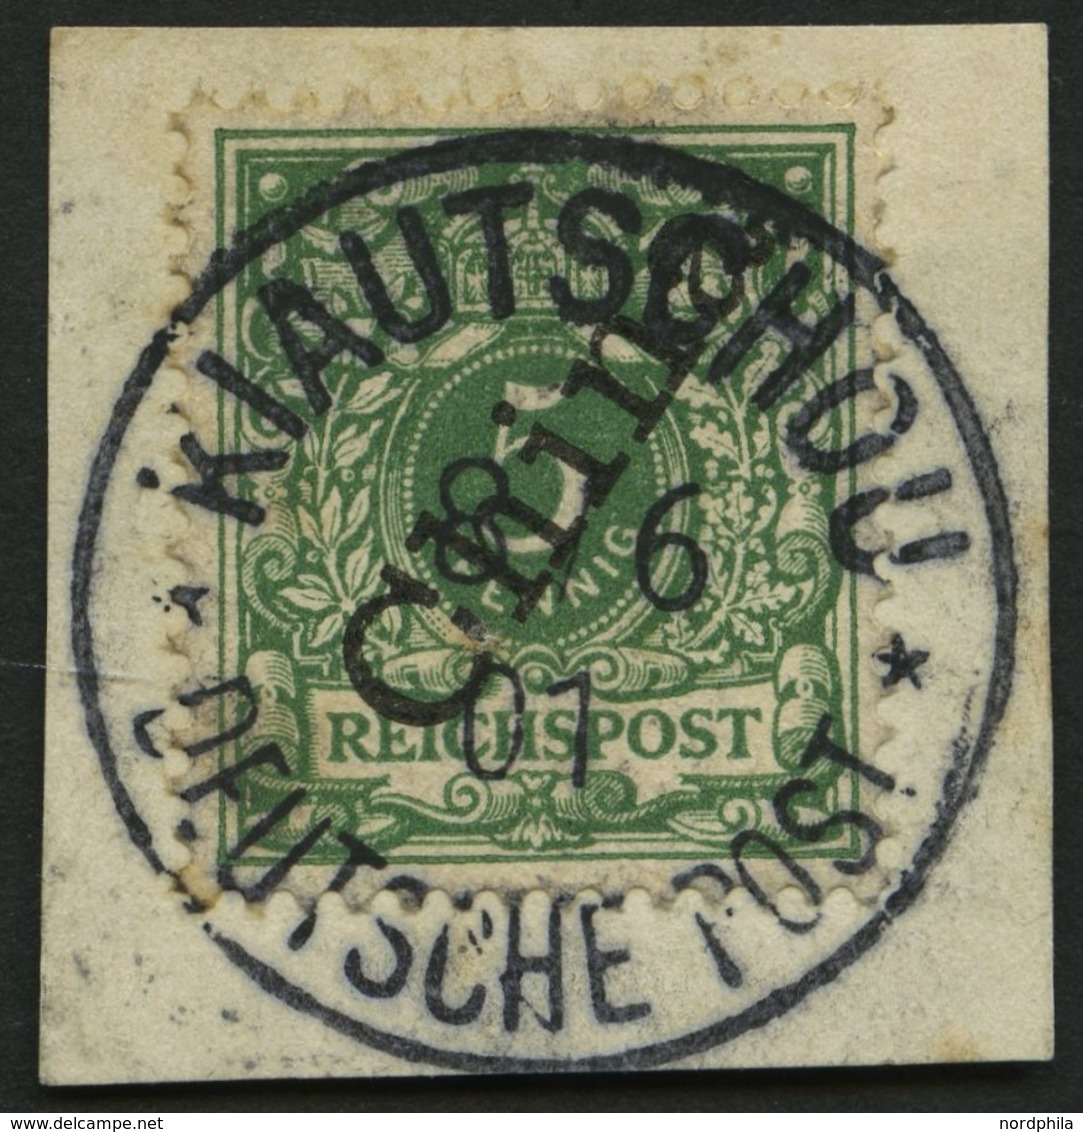 KIAUTSCHOU M 2II BrfStk, 1901, 5 Pf. Steiler Aufdruck, Stempel KIAUTSCHOU DP, Prachtbriefstück - Kiautchou